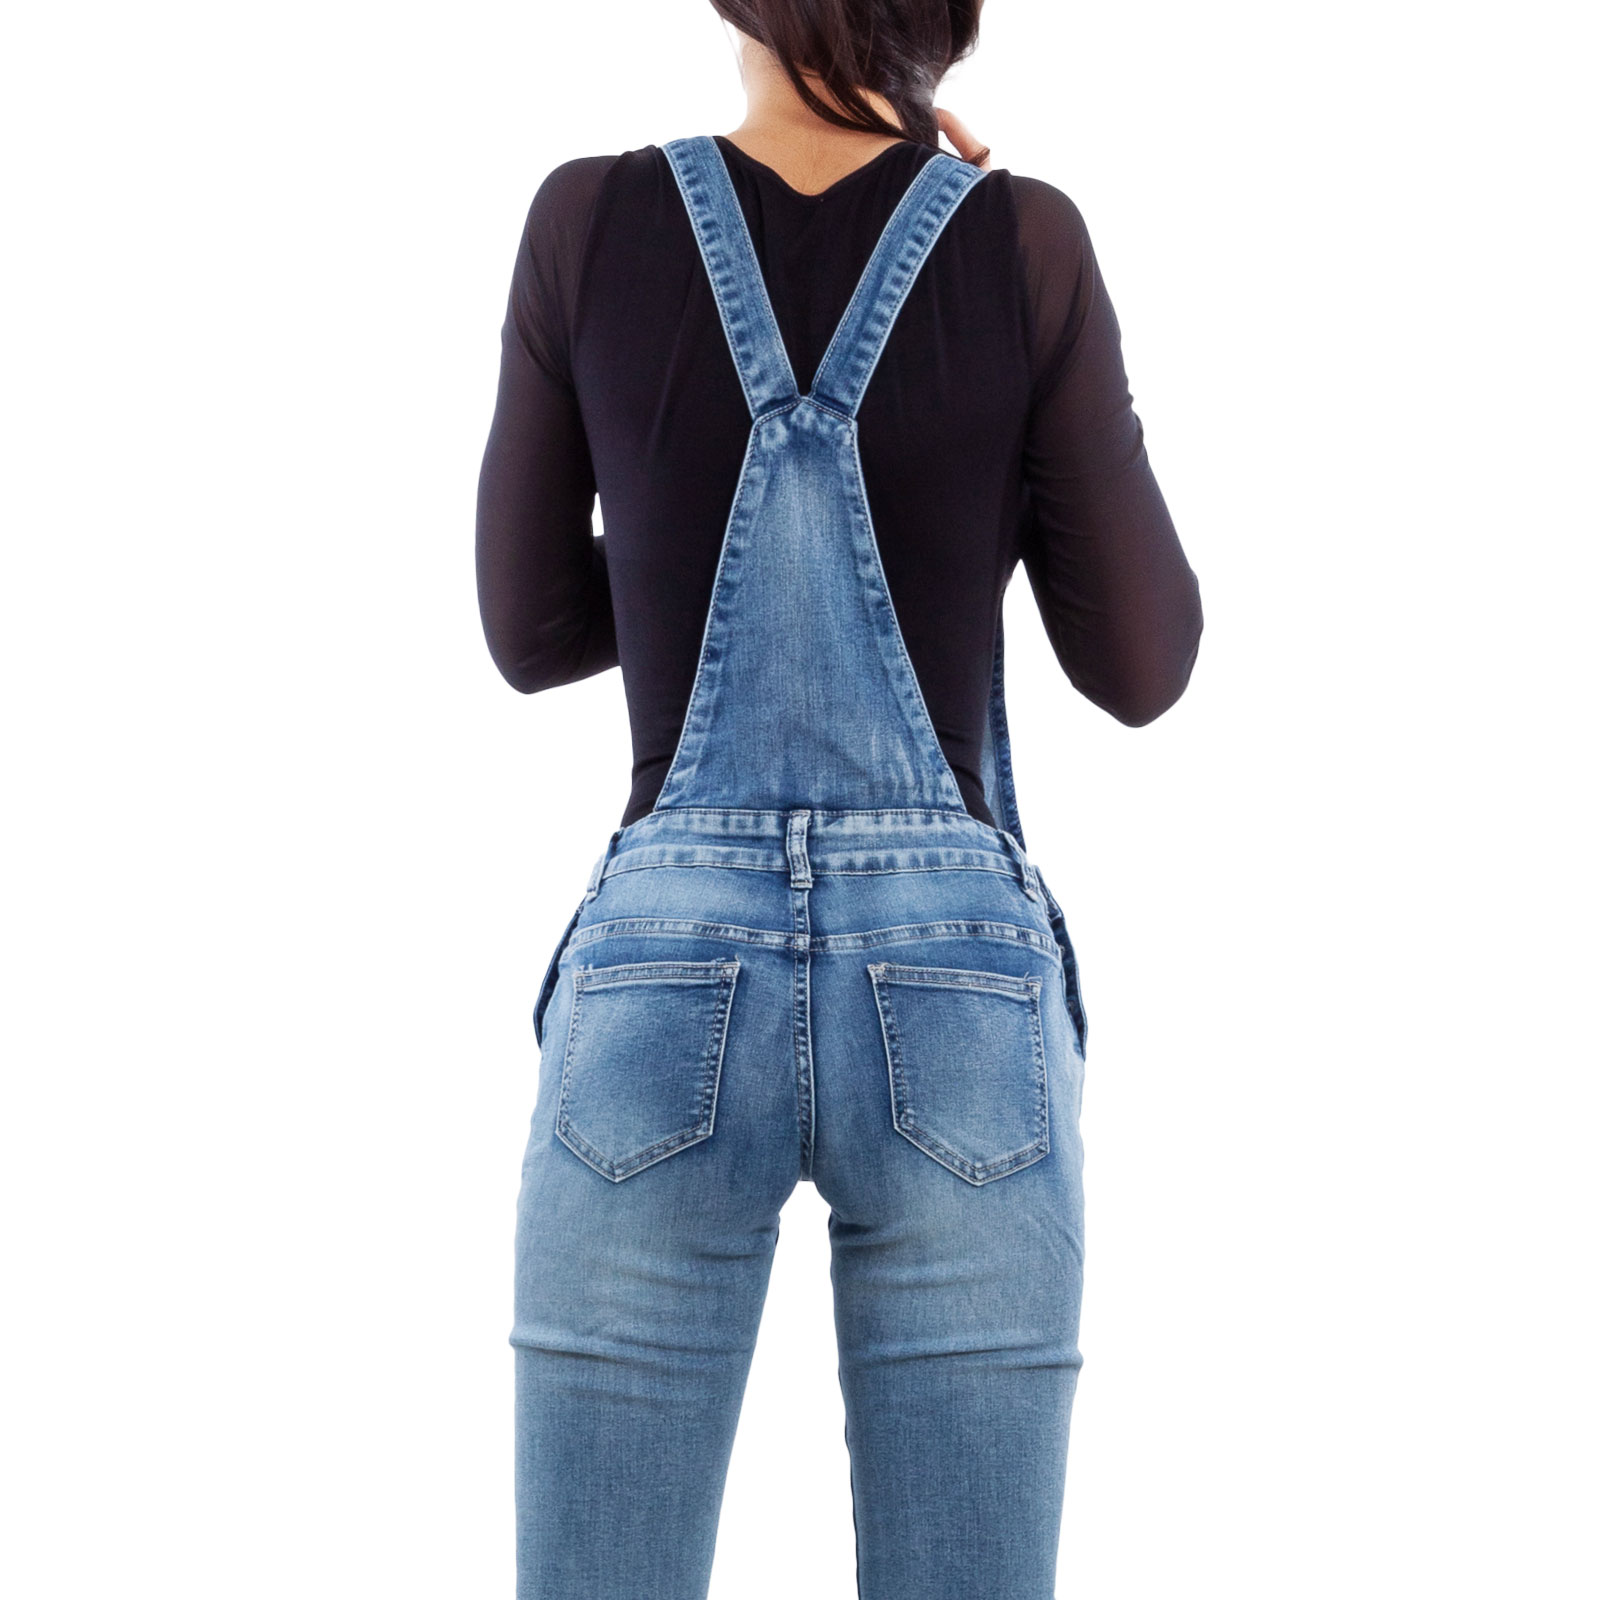 Tuta donna intera tutina jumpsuit overall jeans pantalone manica corta moda 0603